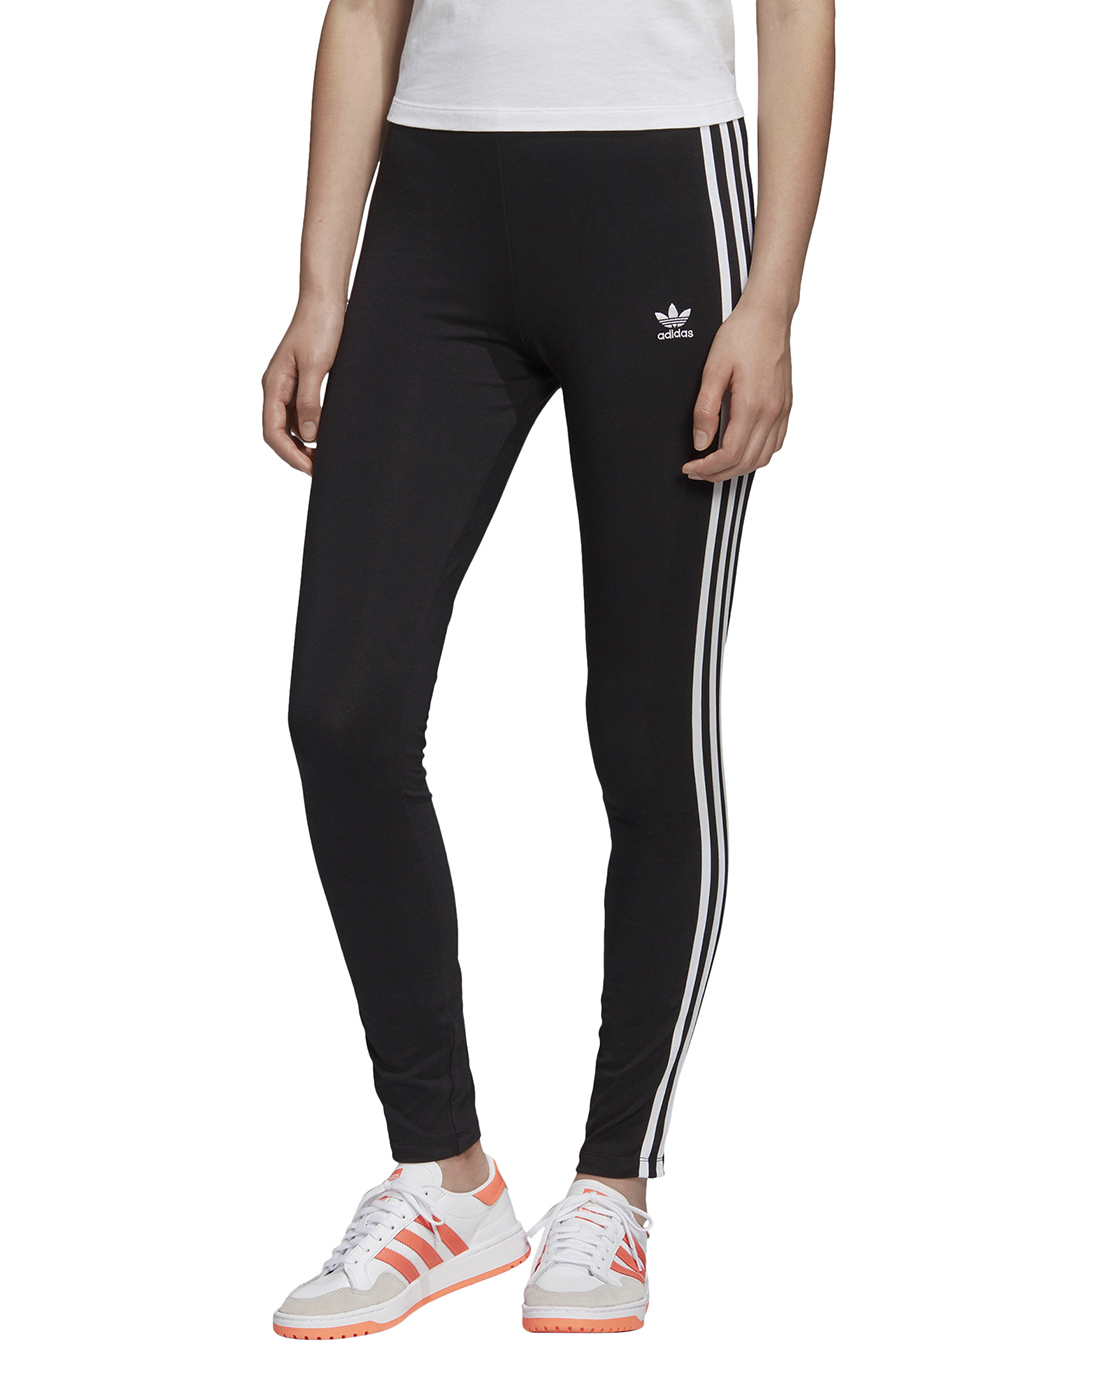 adidas Originals Womens 3 Stripes Leggings - Black | Life Style Sports IE